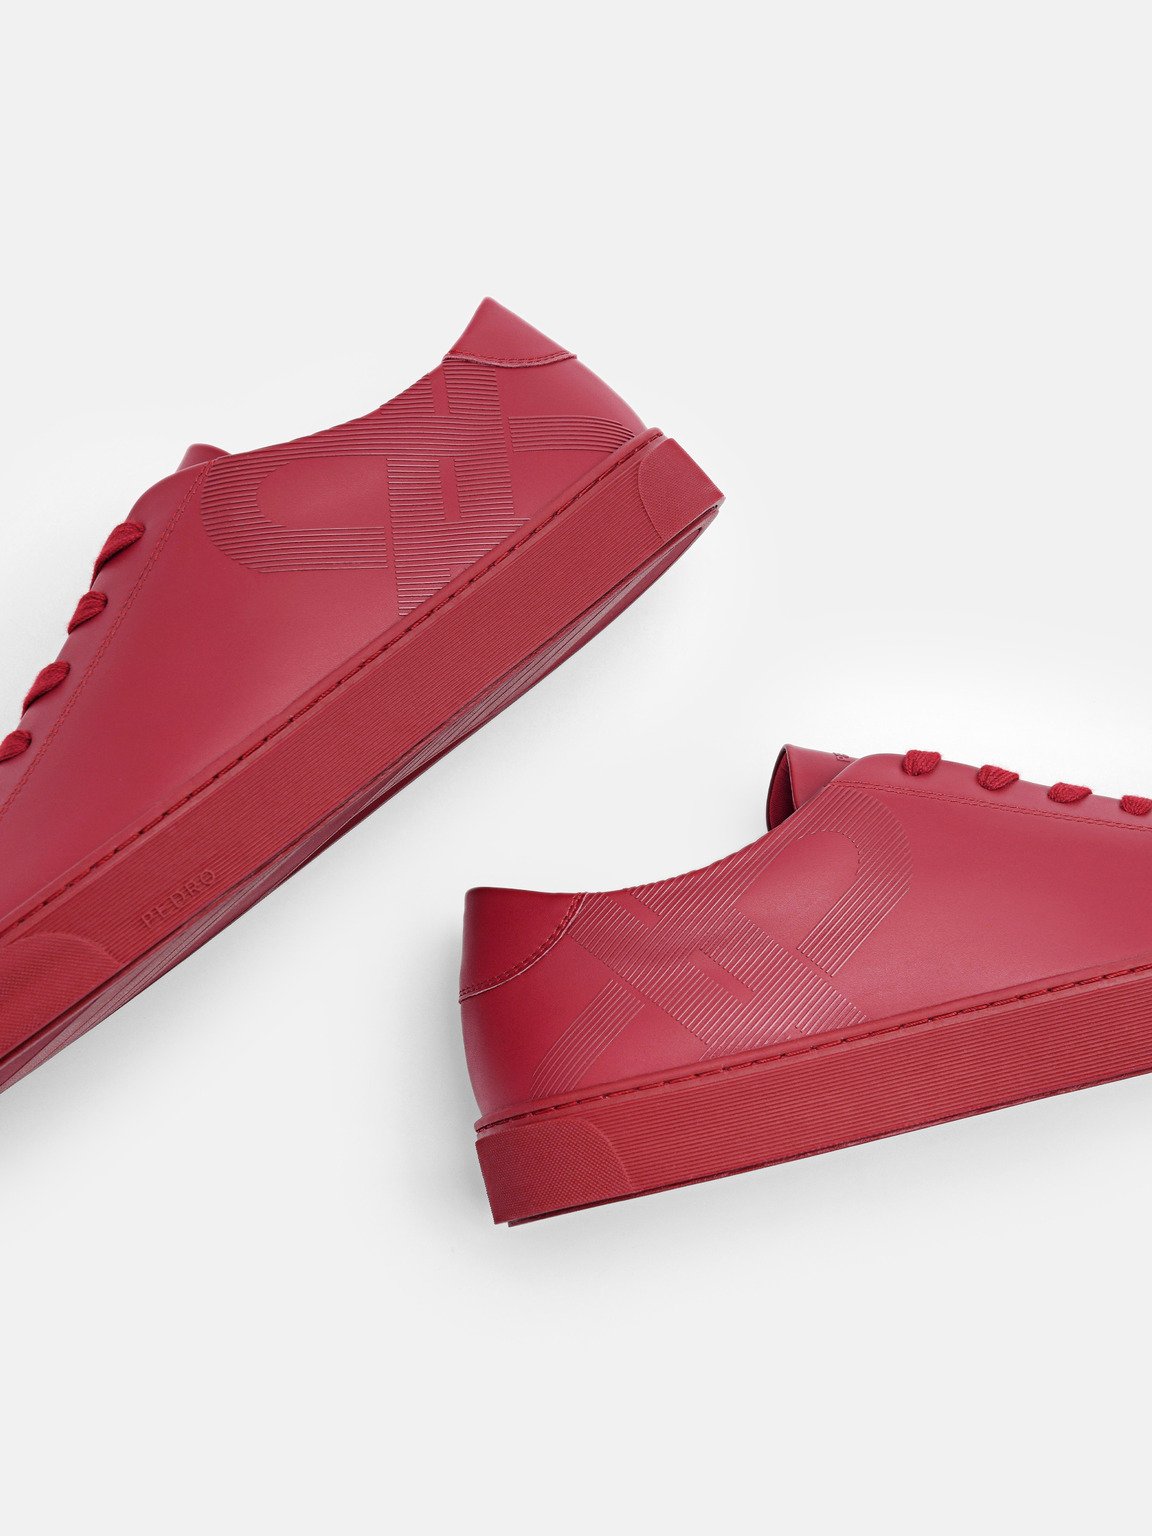 Men's PEDRO Icon Ridge Leather Sneakers, Red